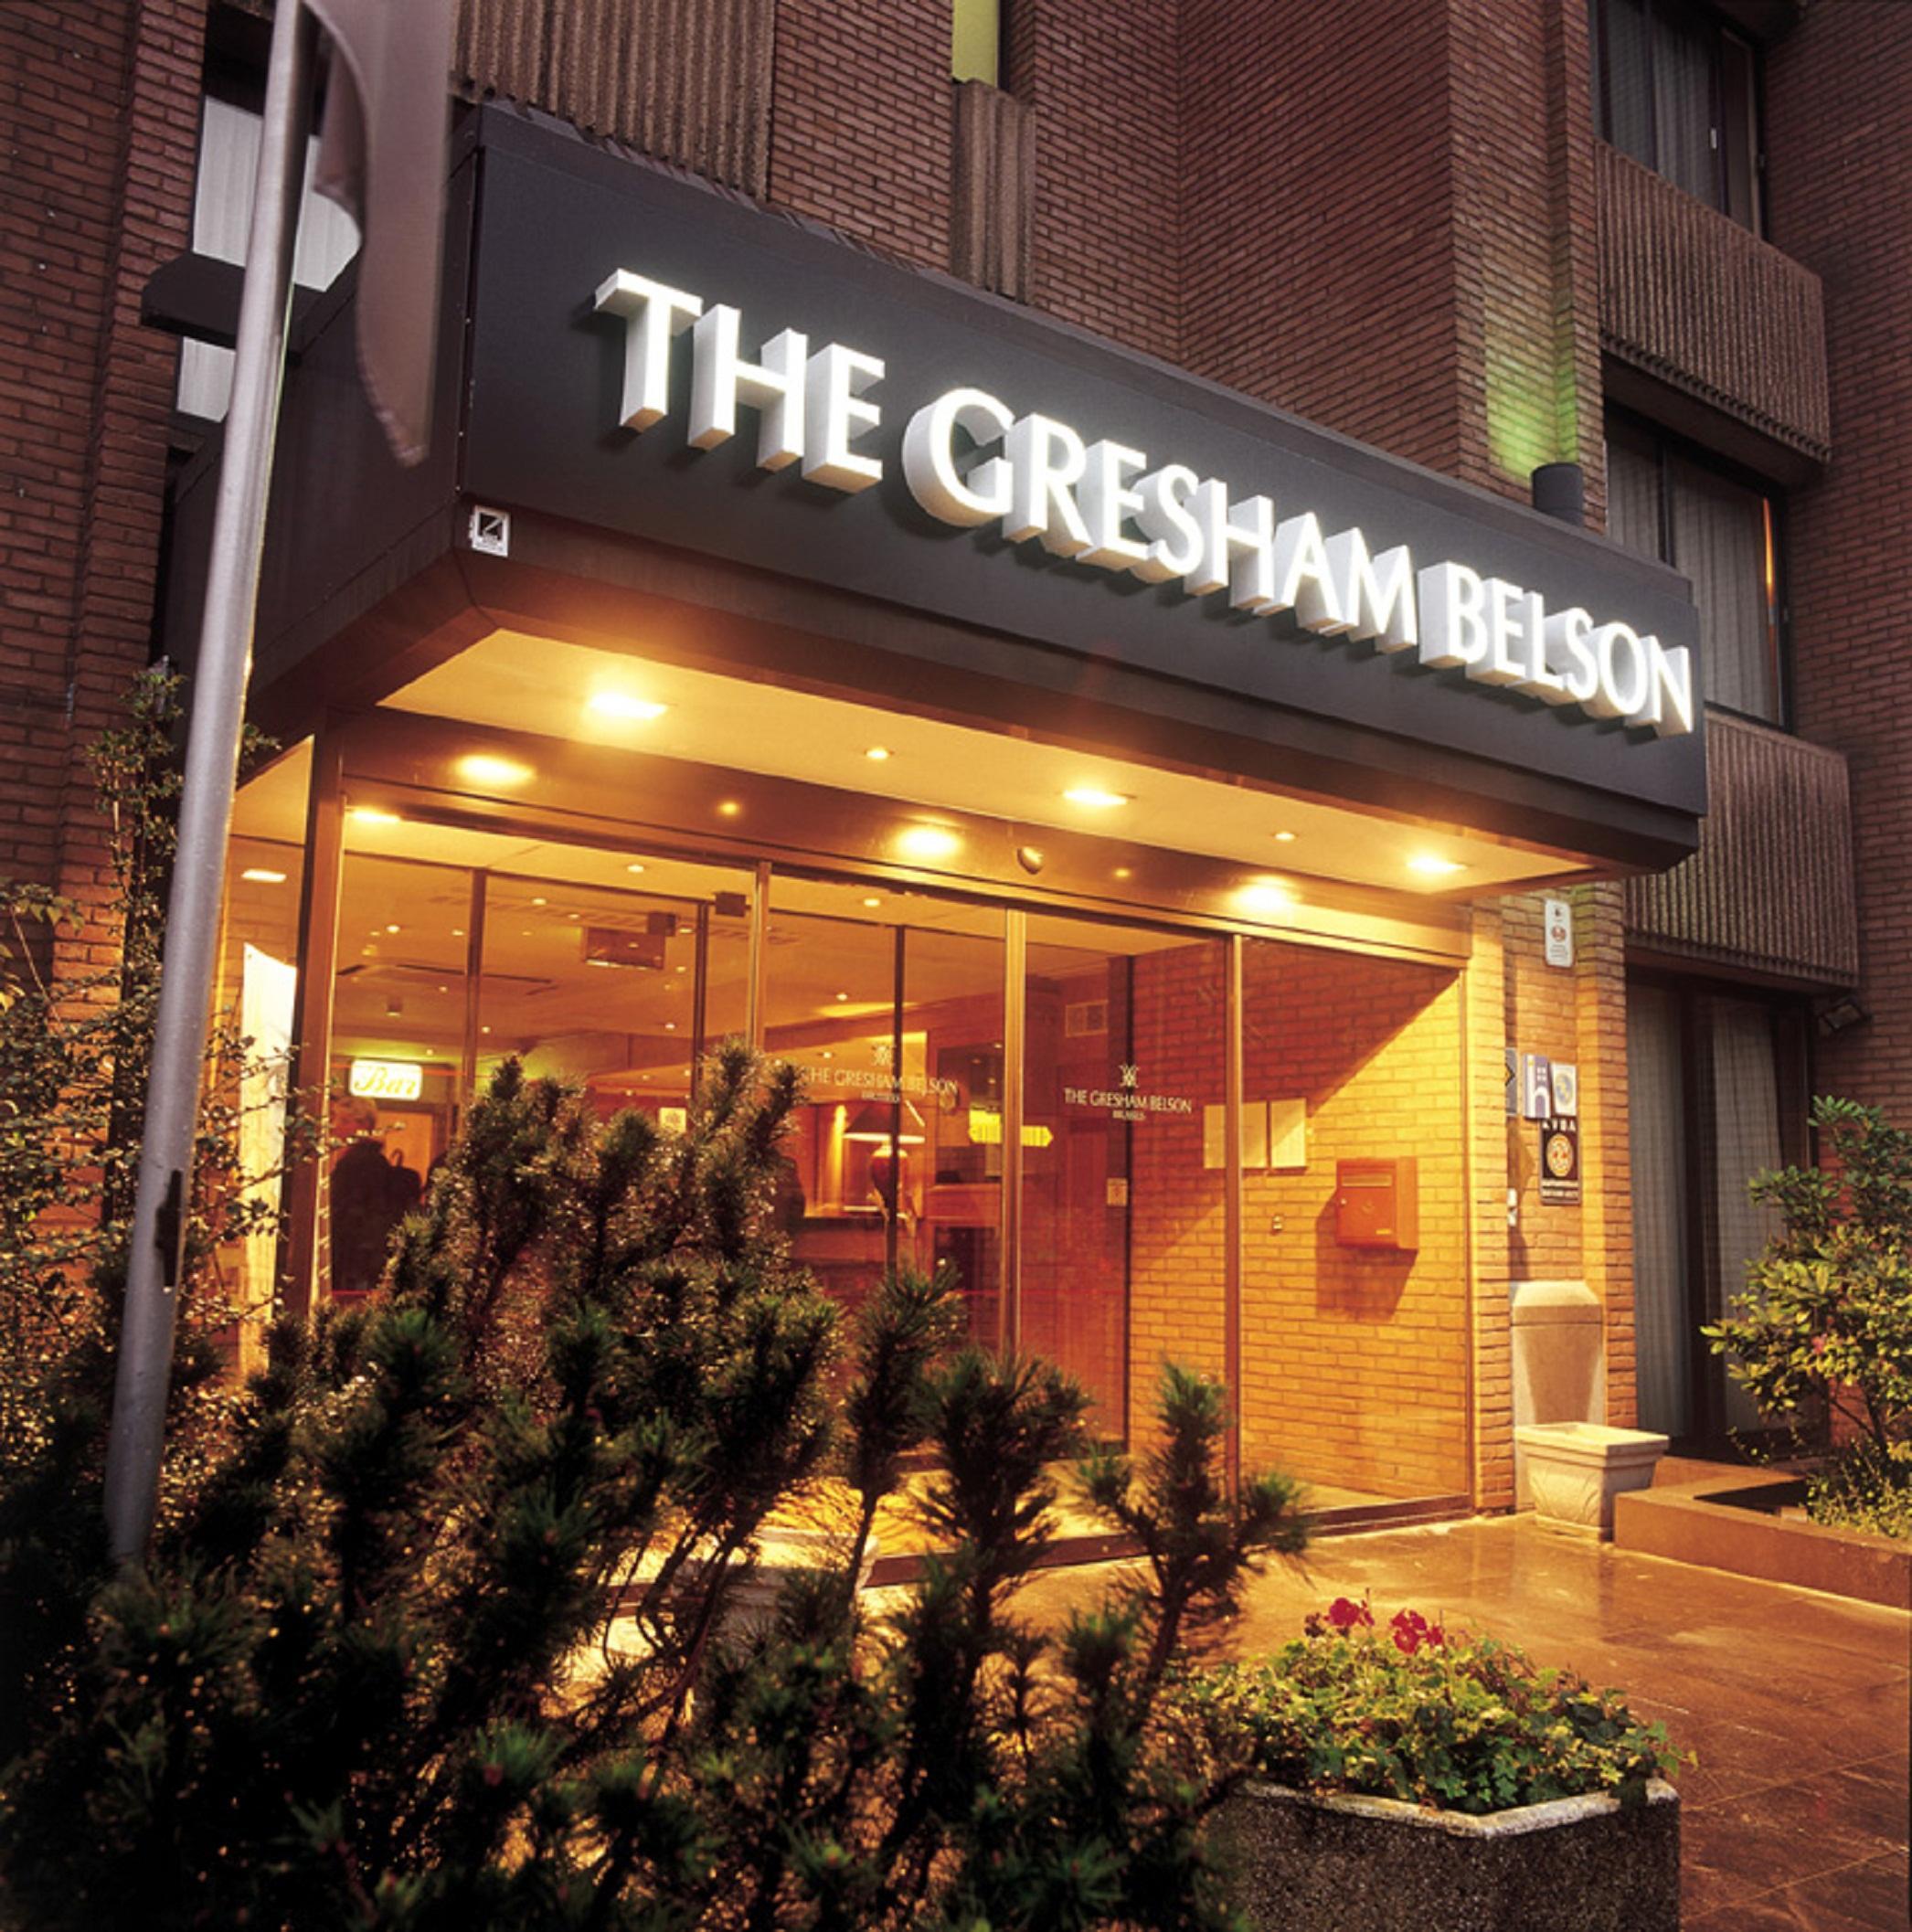 Gresham Belson Hotel Bruselas Exterior foto